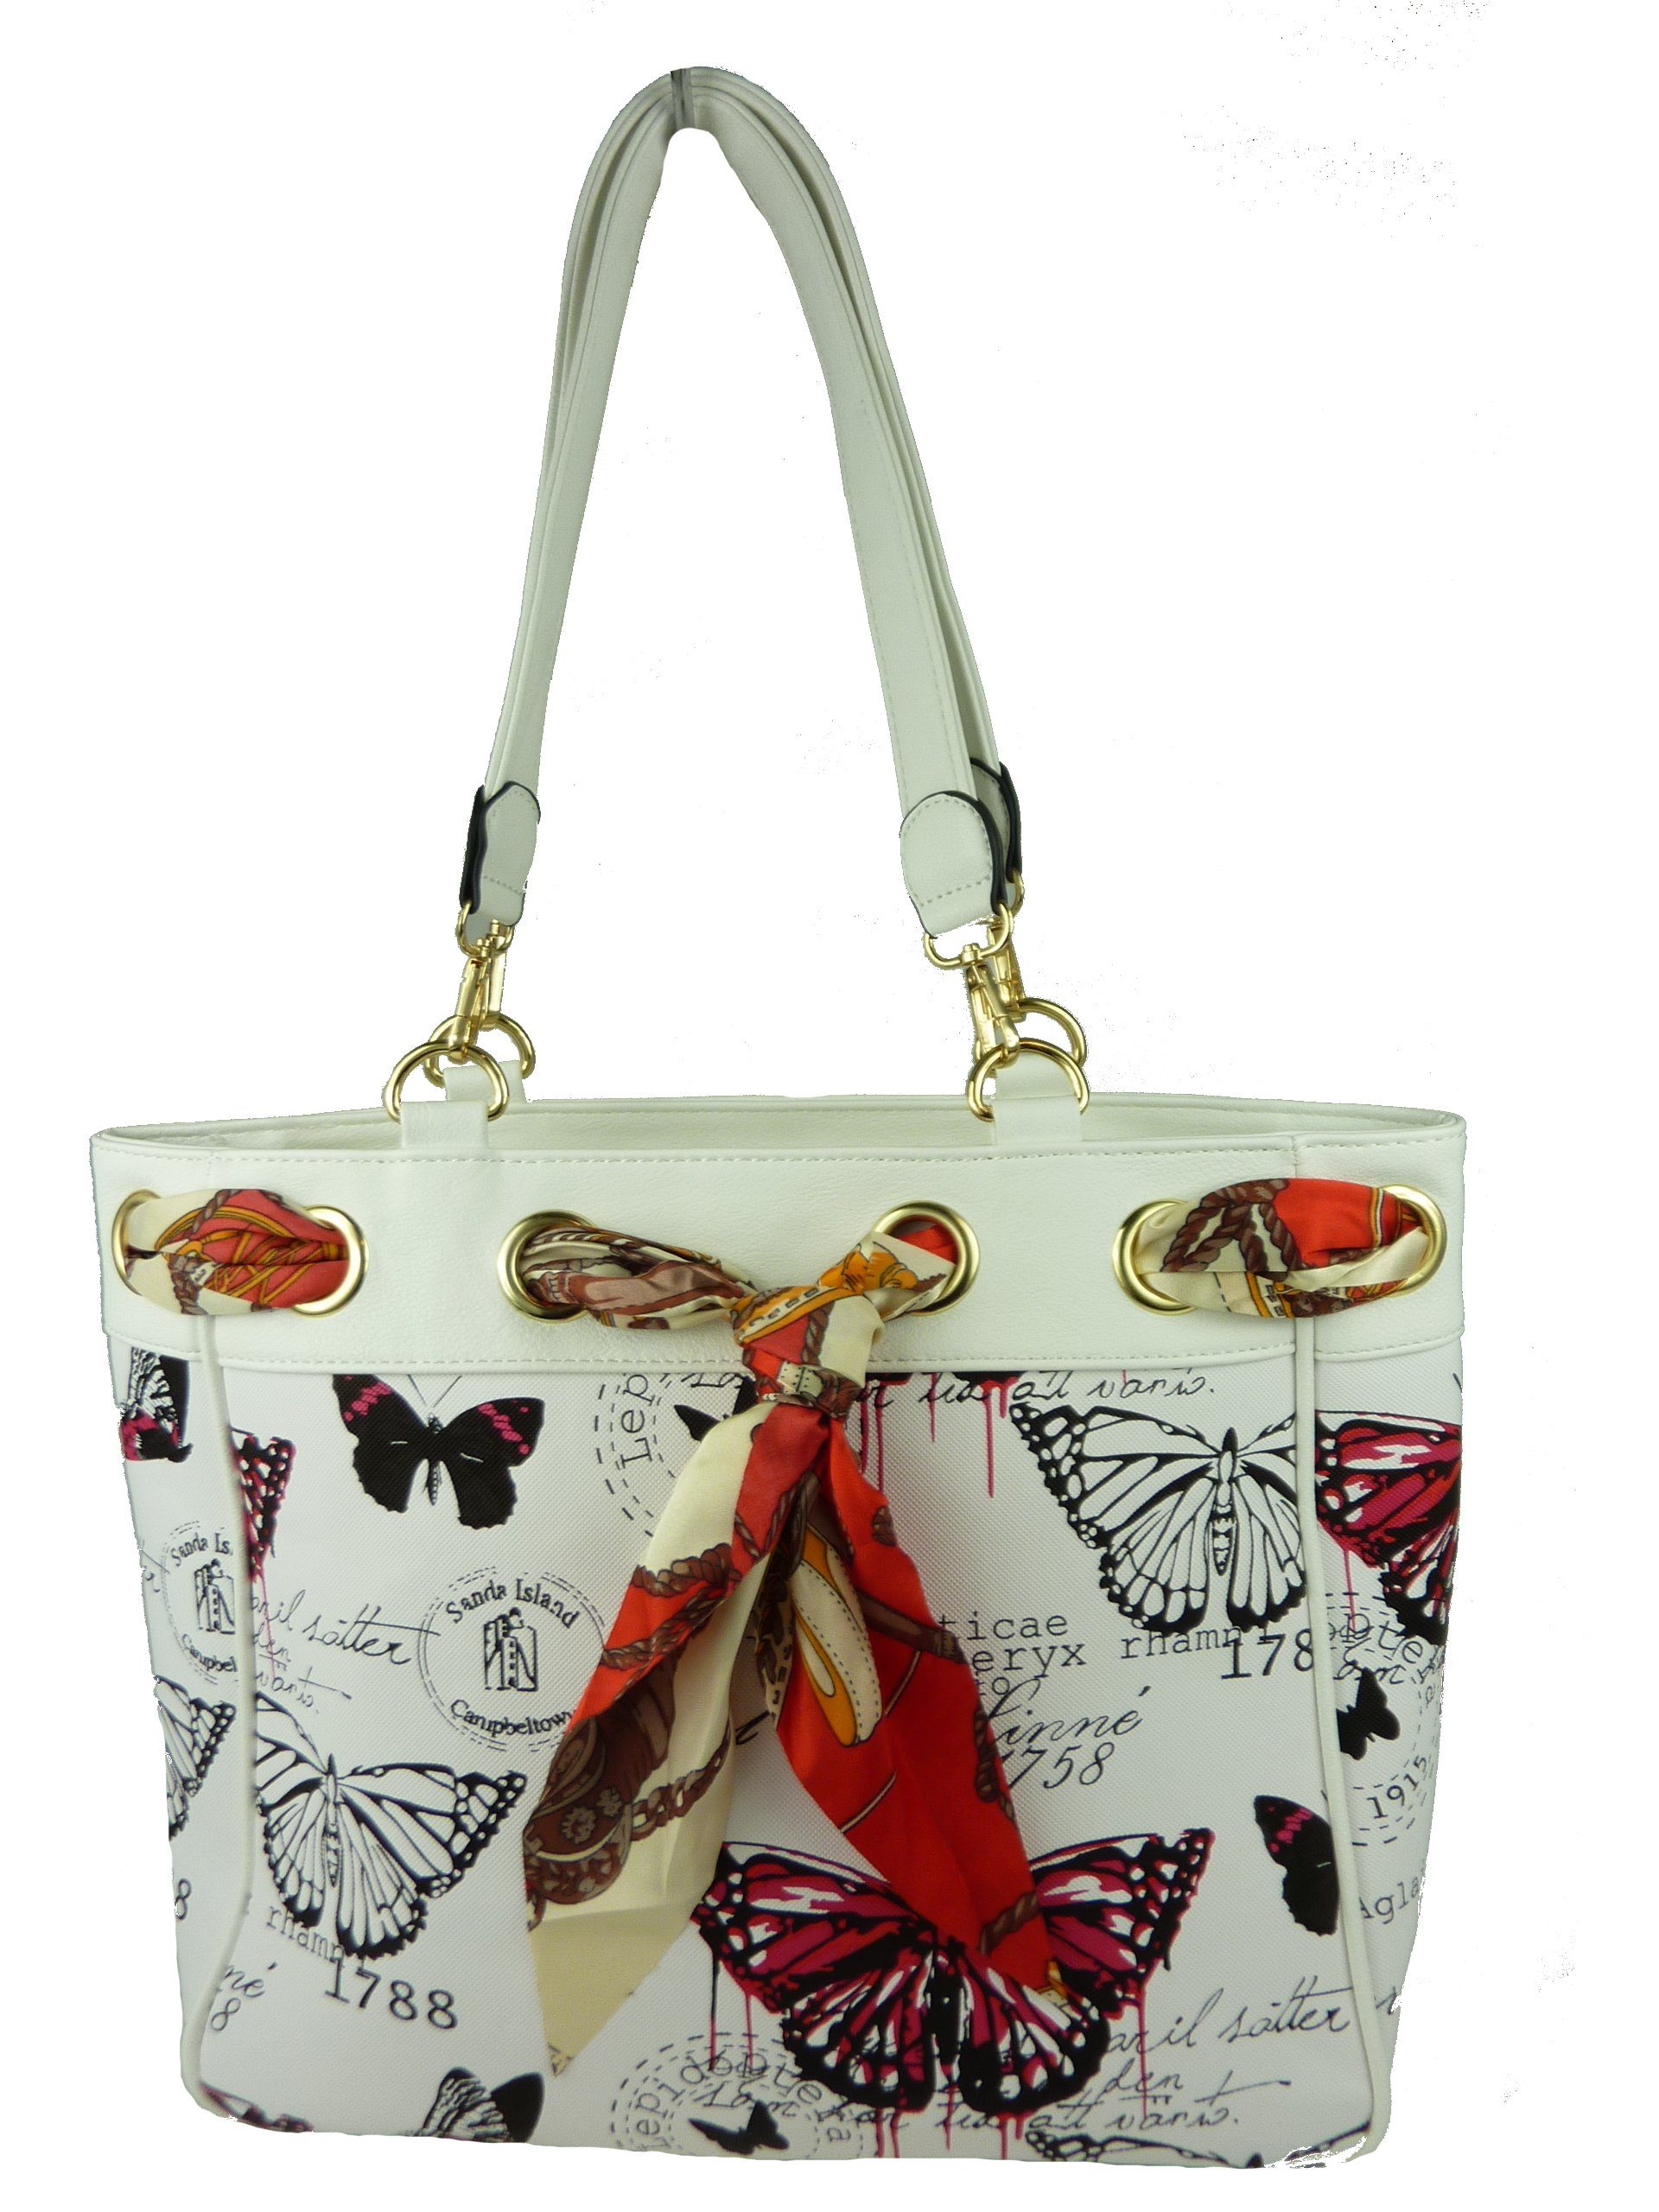 Taschen4life Shopper Damen Shoppertasche Butterfly - große moderne Schultertasche 5817, im casual Vintage Stil